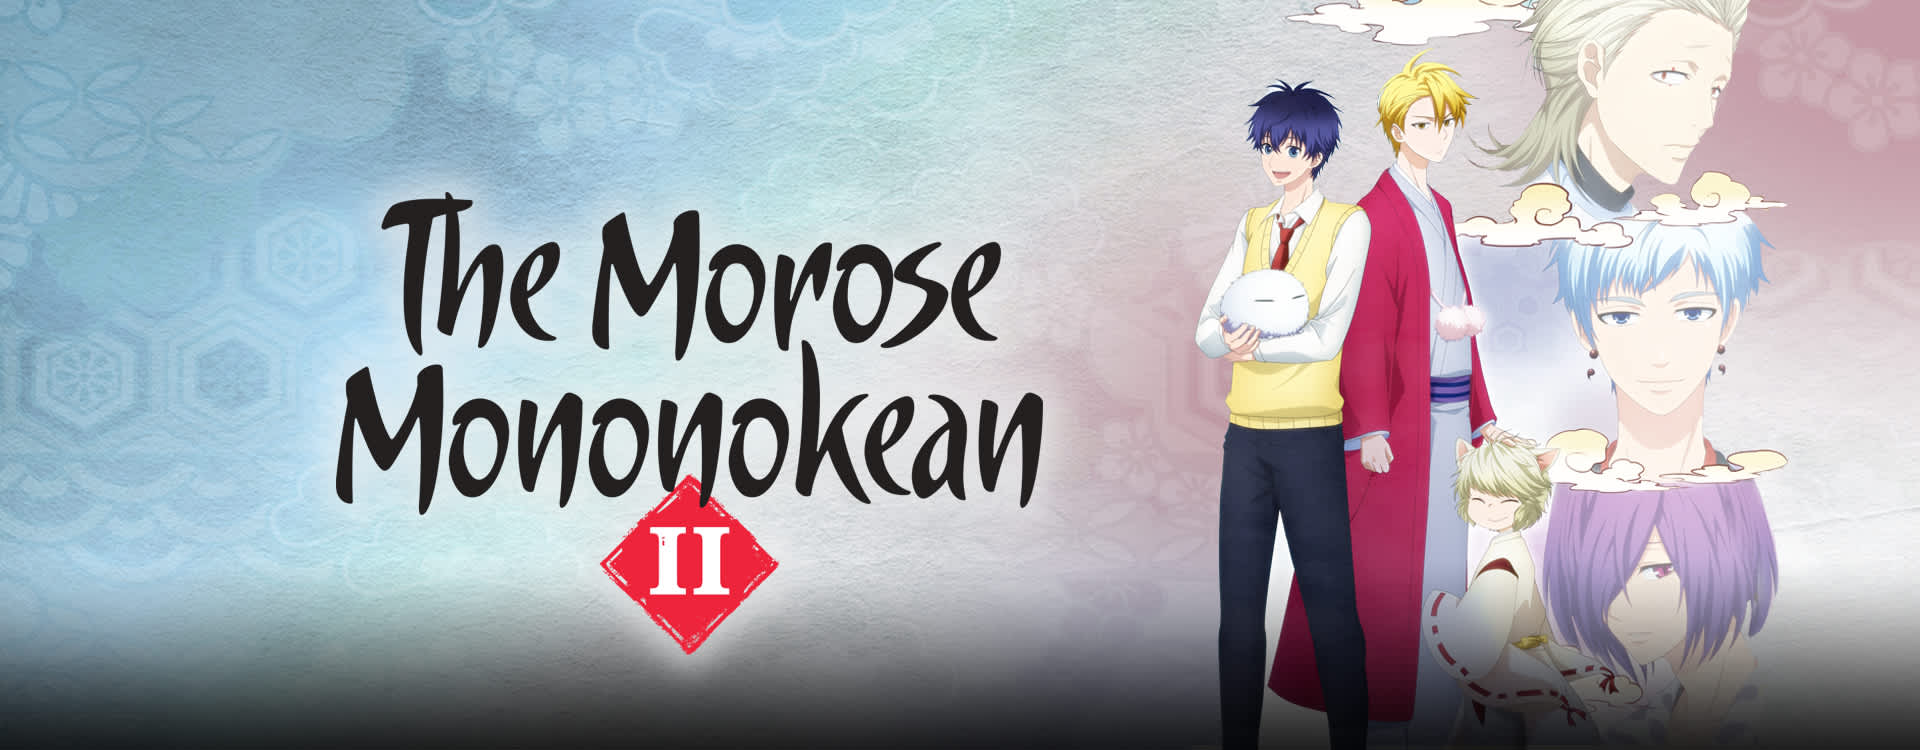 Watch The Morose Mononokean Episodes Sub & Dub. Comedy, Drama, Fantasy Anime